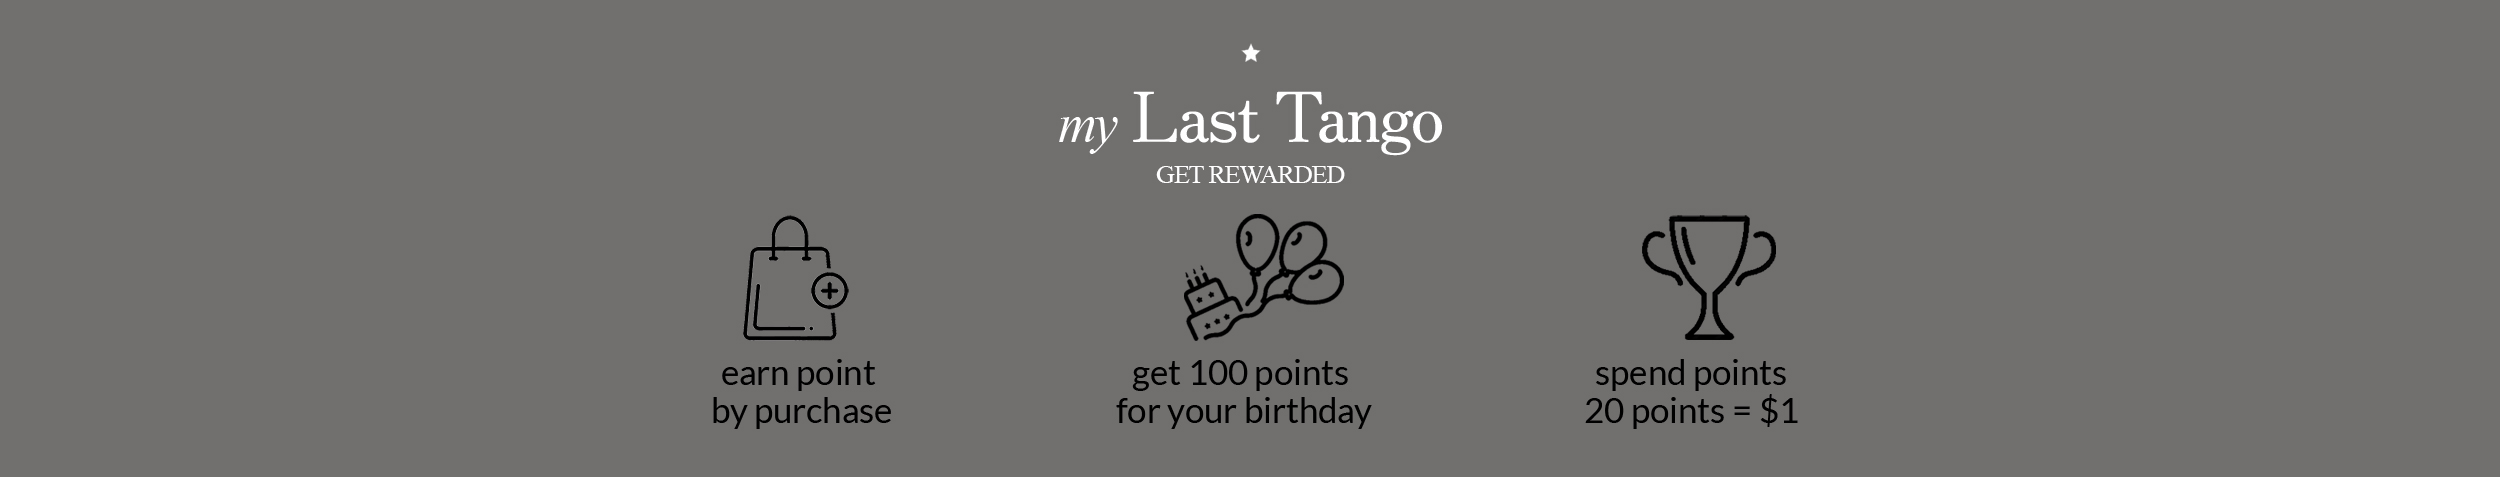 Reward Program at last tango